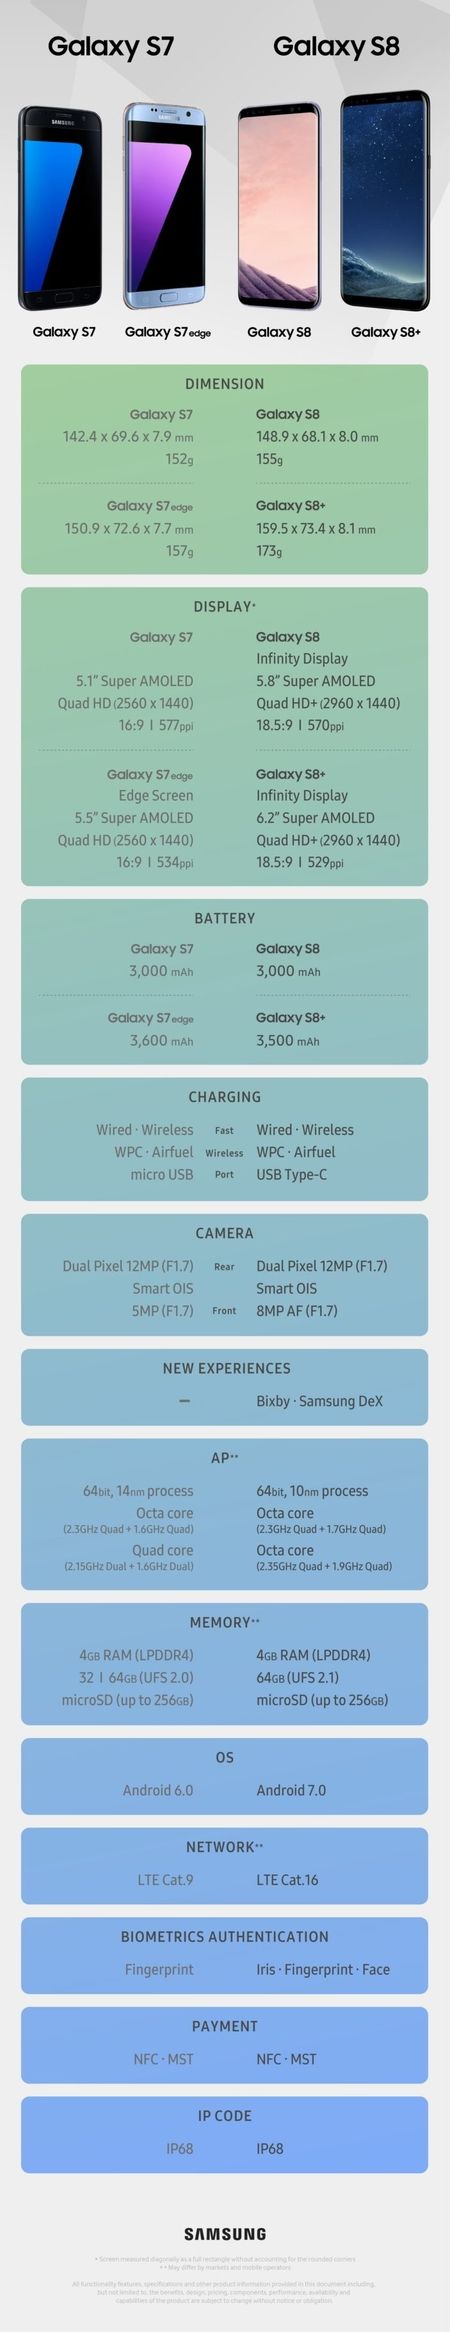 Samsung Galaxy S7 versus Galaxy S8